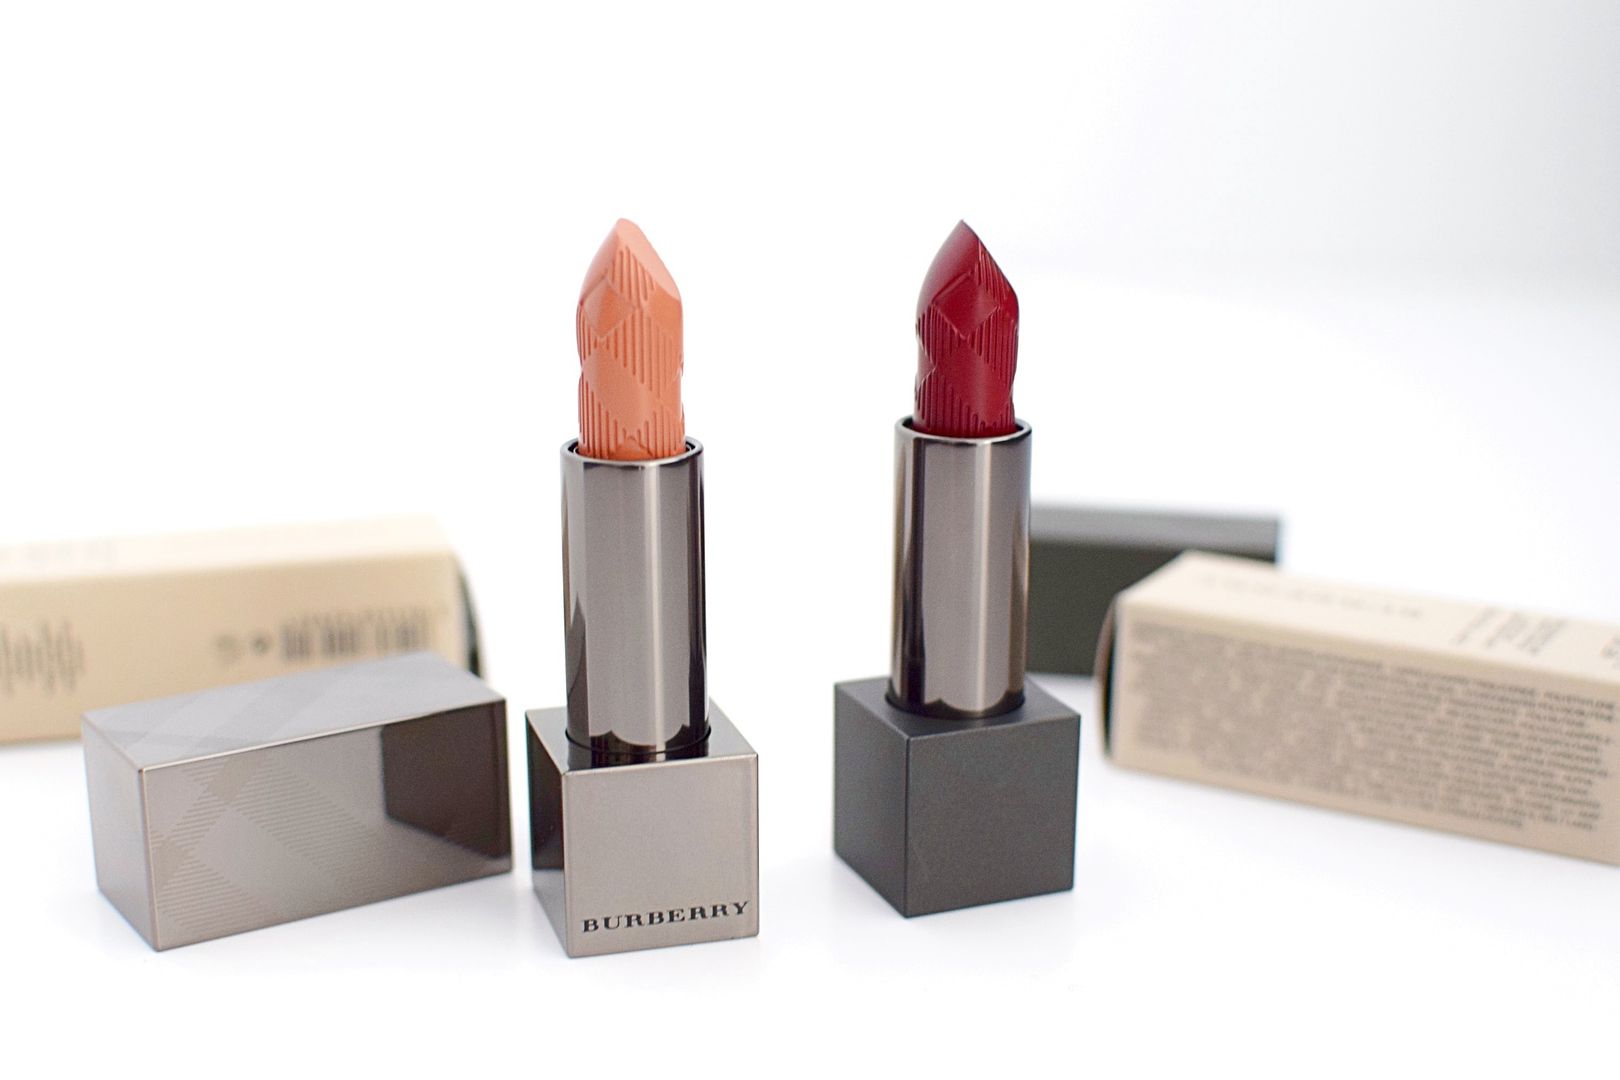 Burberry Lipsticks Oxblood and Nude No.1 